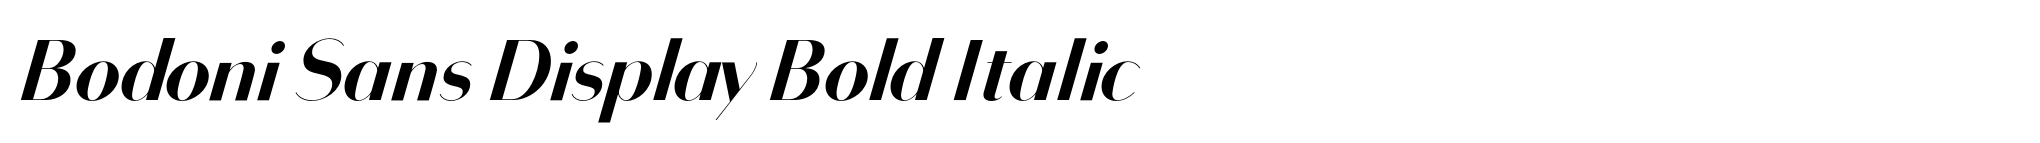 Bodoni Sans Display Bold Italic image